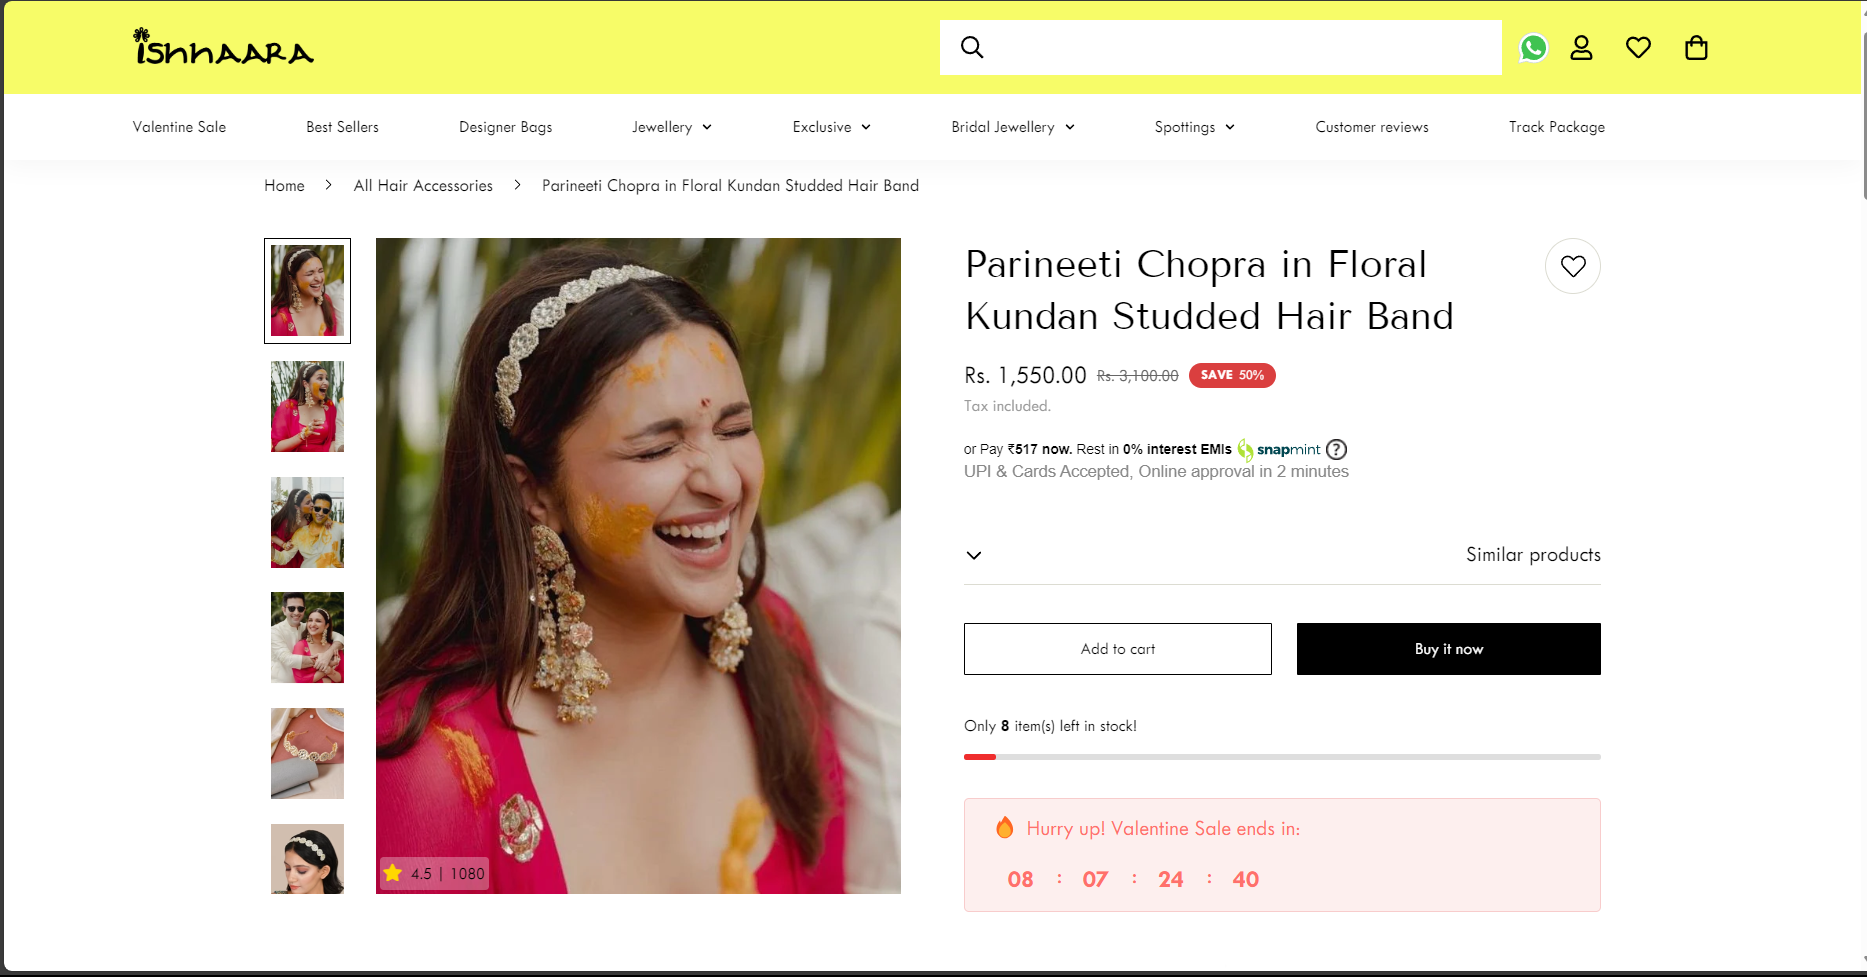 Parineeti Chopra in Floral Kundan Studded Hair Band